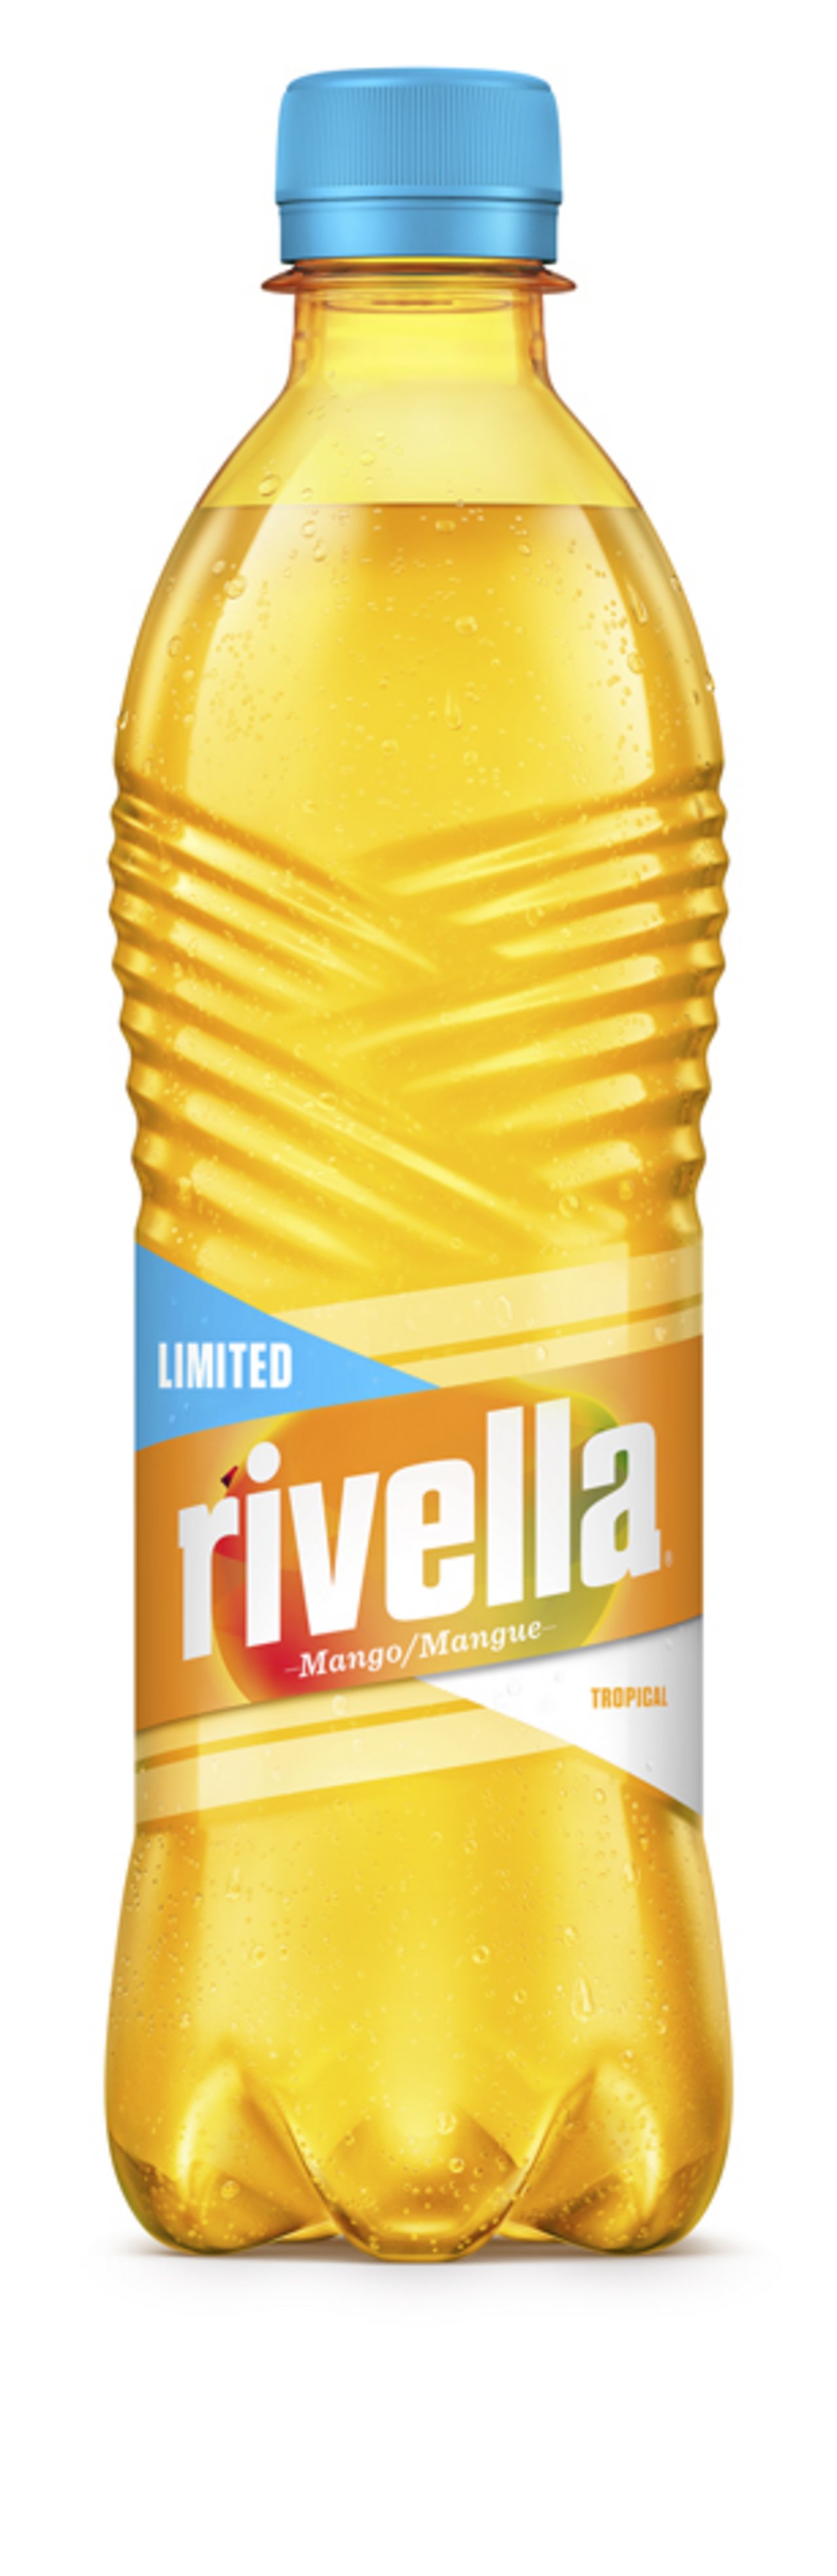 Das neue Rivella mit Mango-Geschmack löst Rivella Pfirsich ab. (Bild ots/Rivella AG)